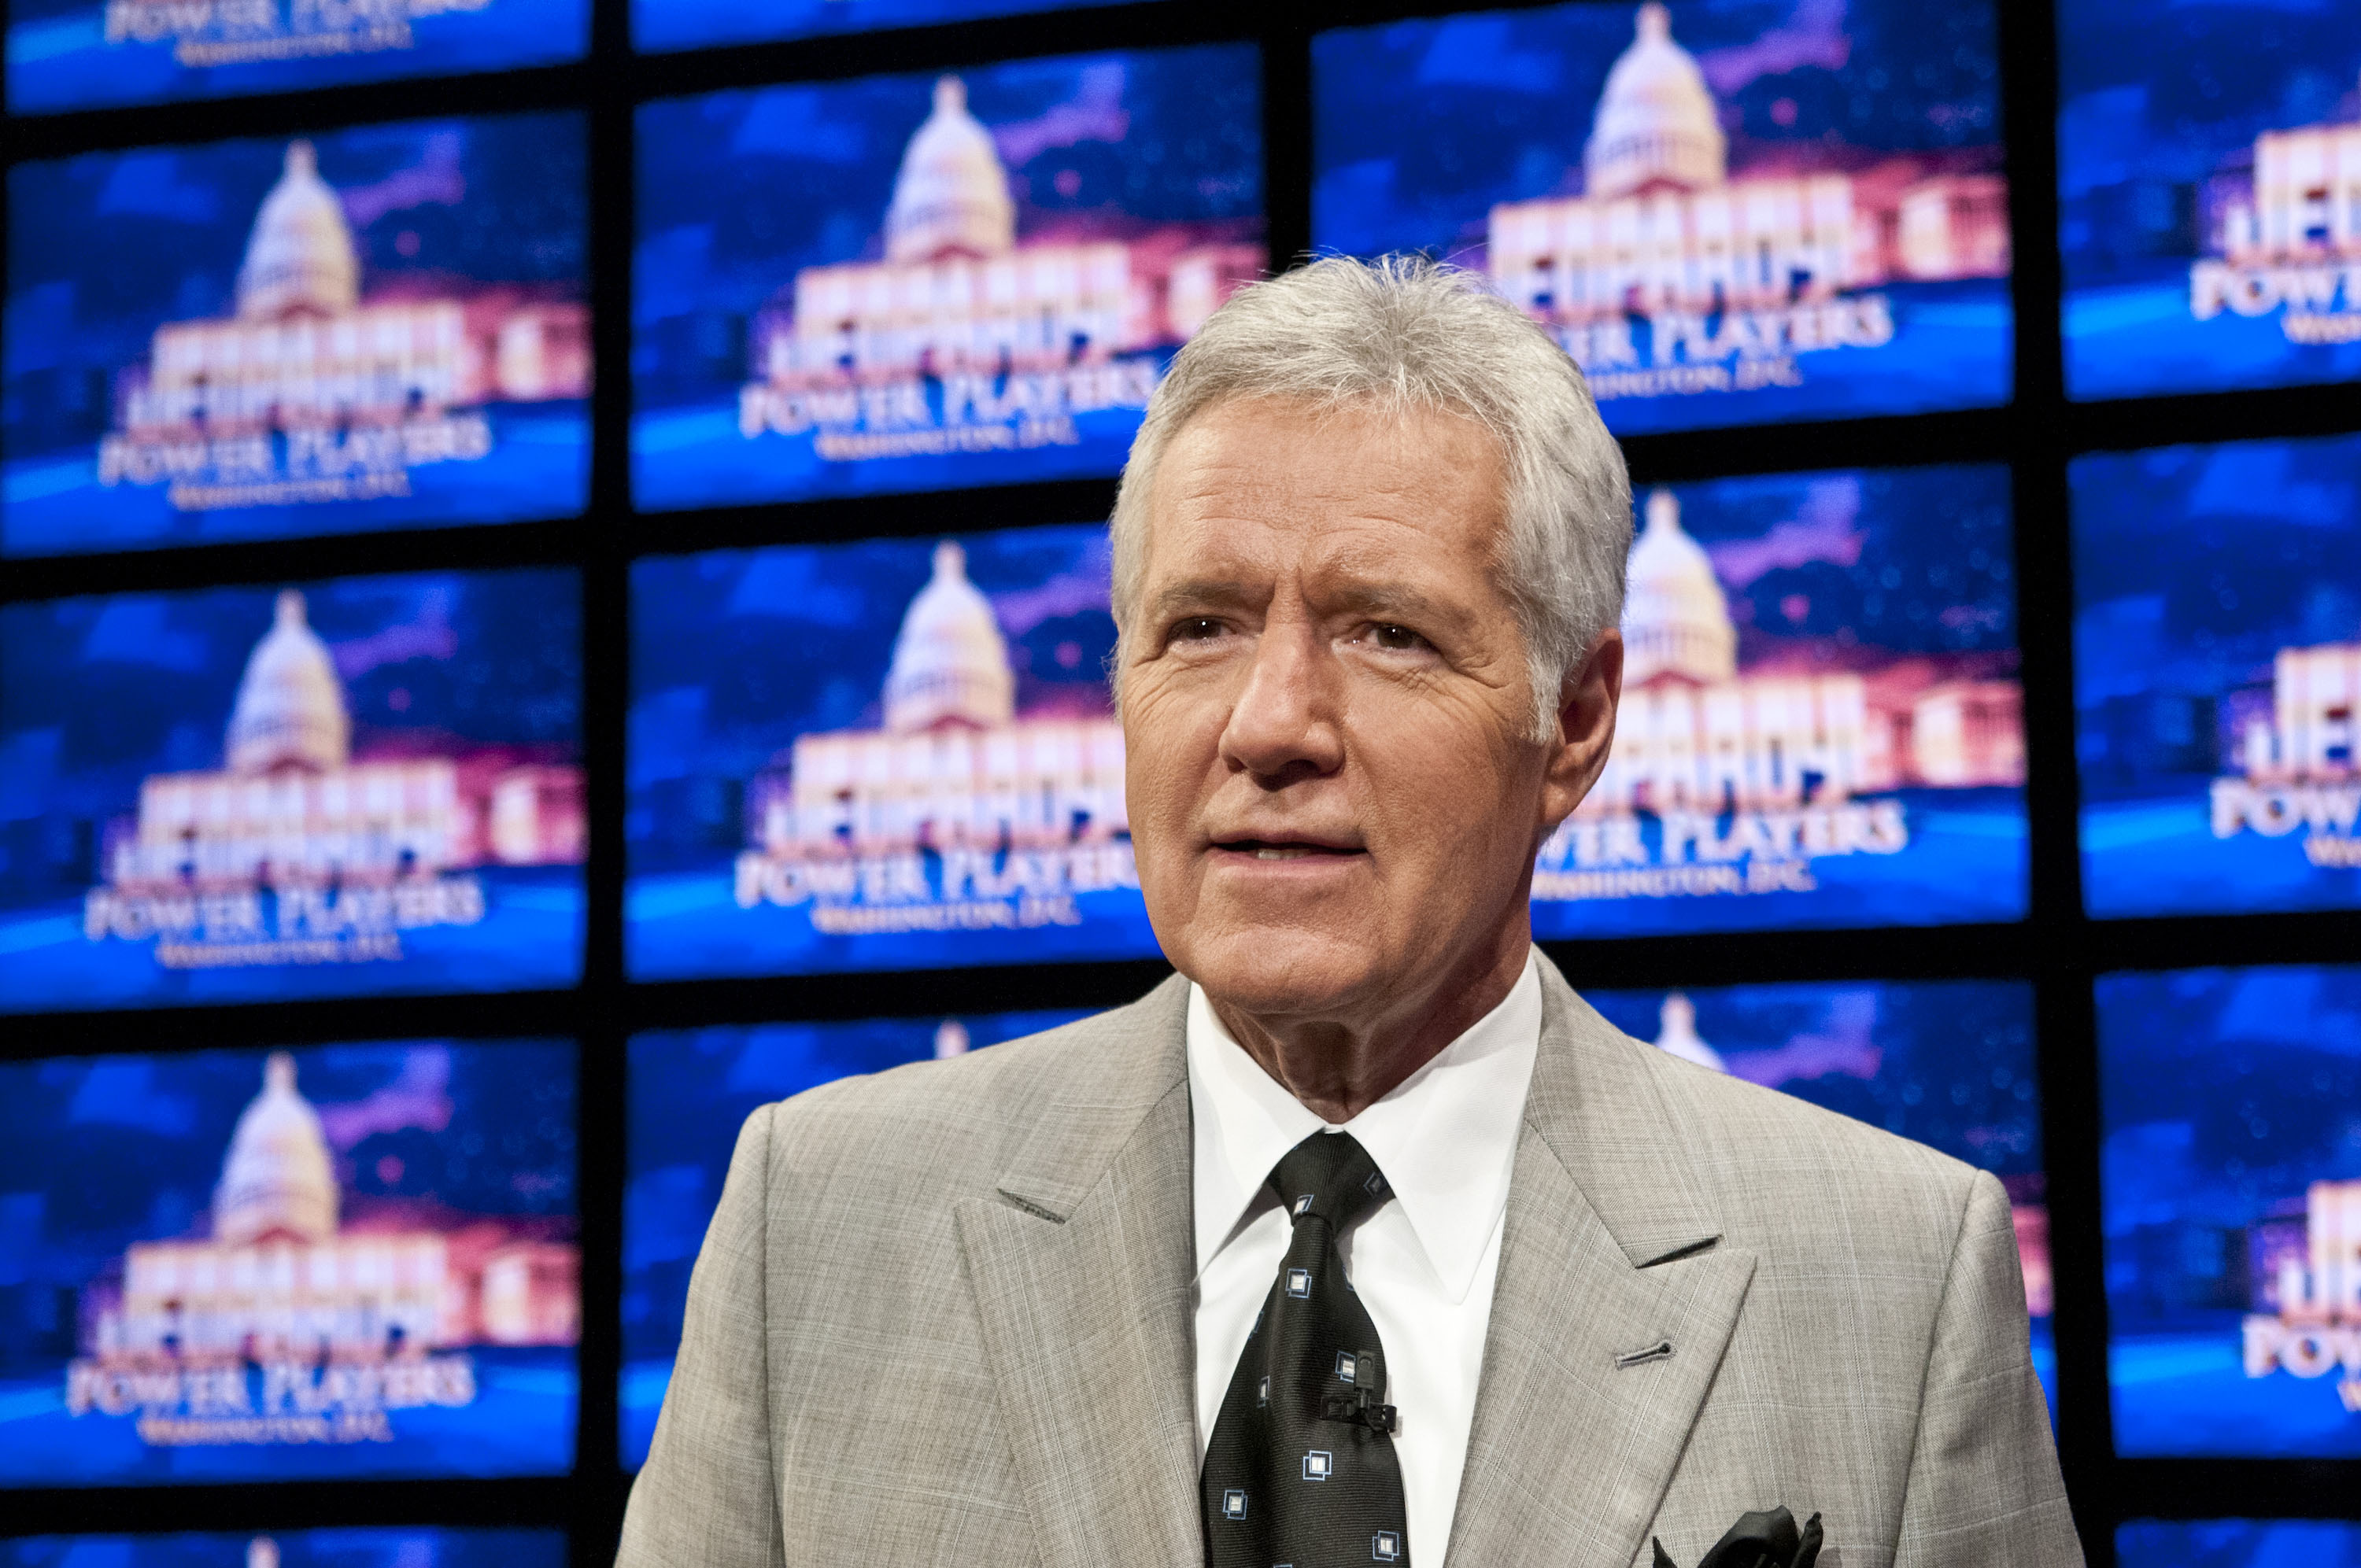 ‘Jeopardy!’ Gets Emotional With Heartfelt Message To Host Alex Trebek